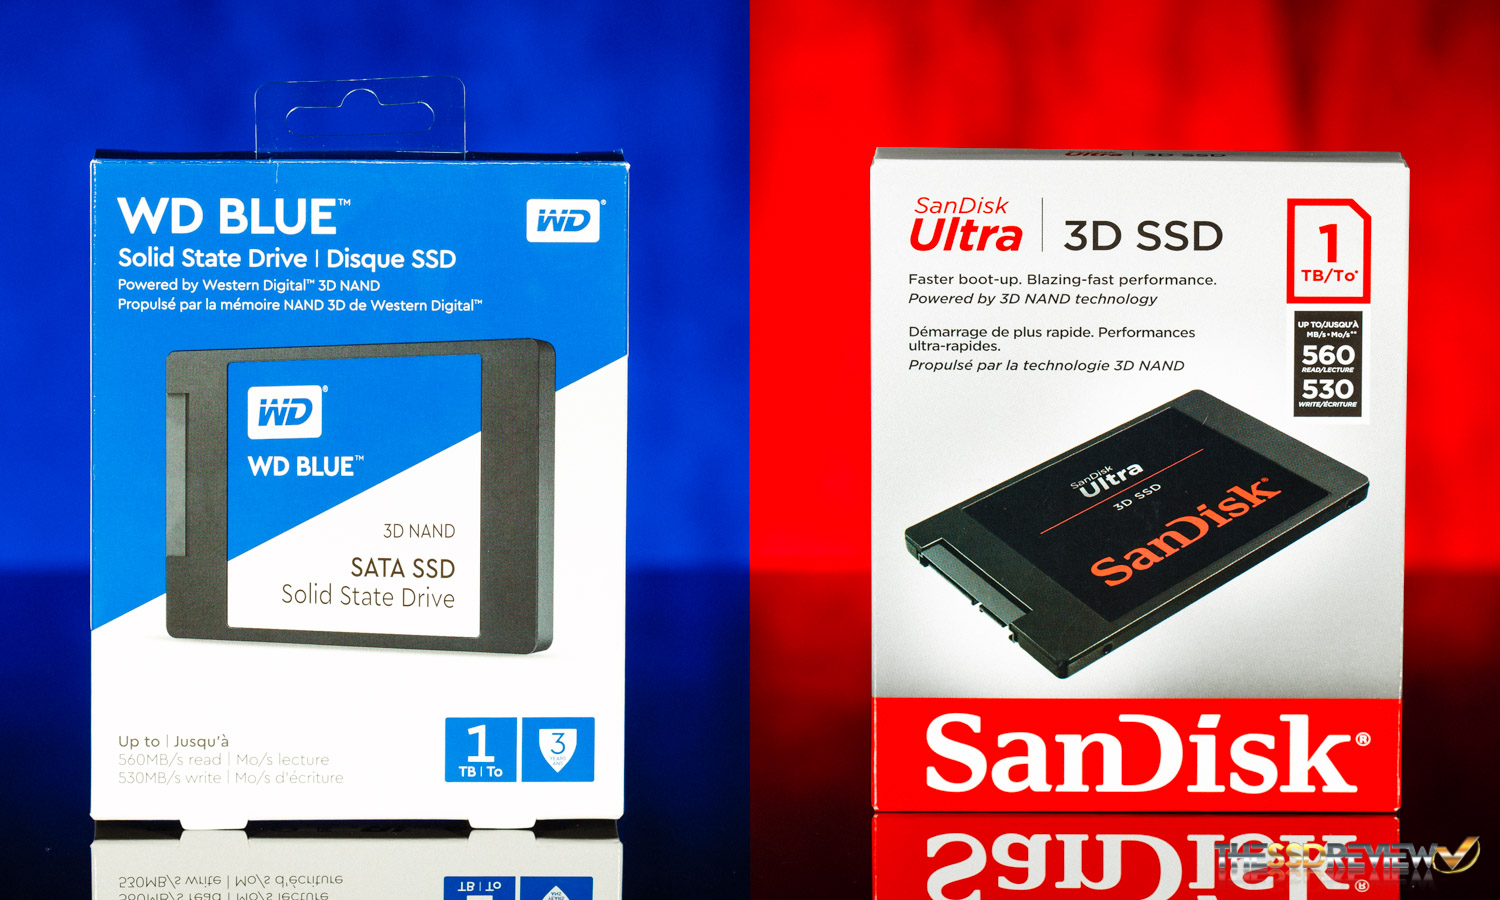 Sandisk Ultra 3d Ssd Sale Online, 53% OFF | www.ingeniovirtual.com